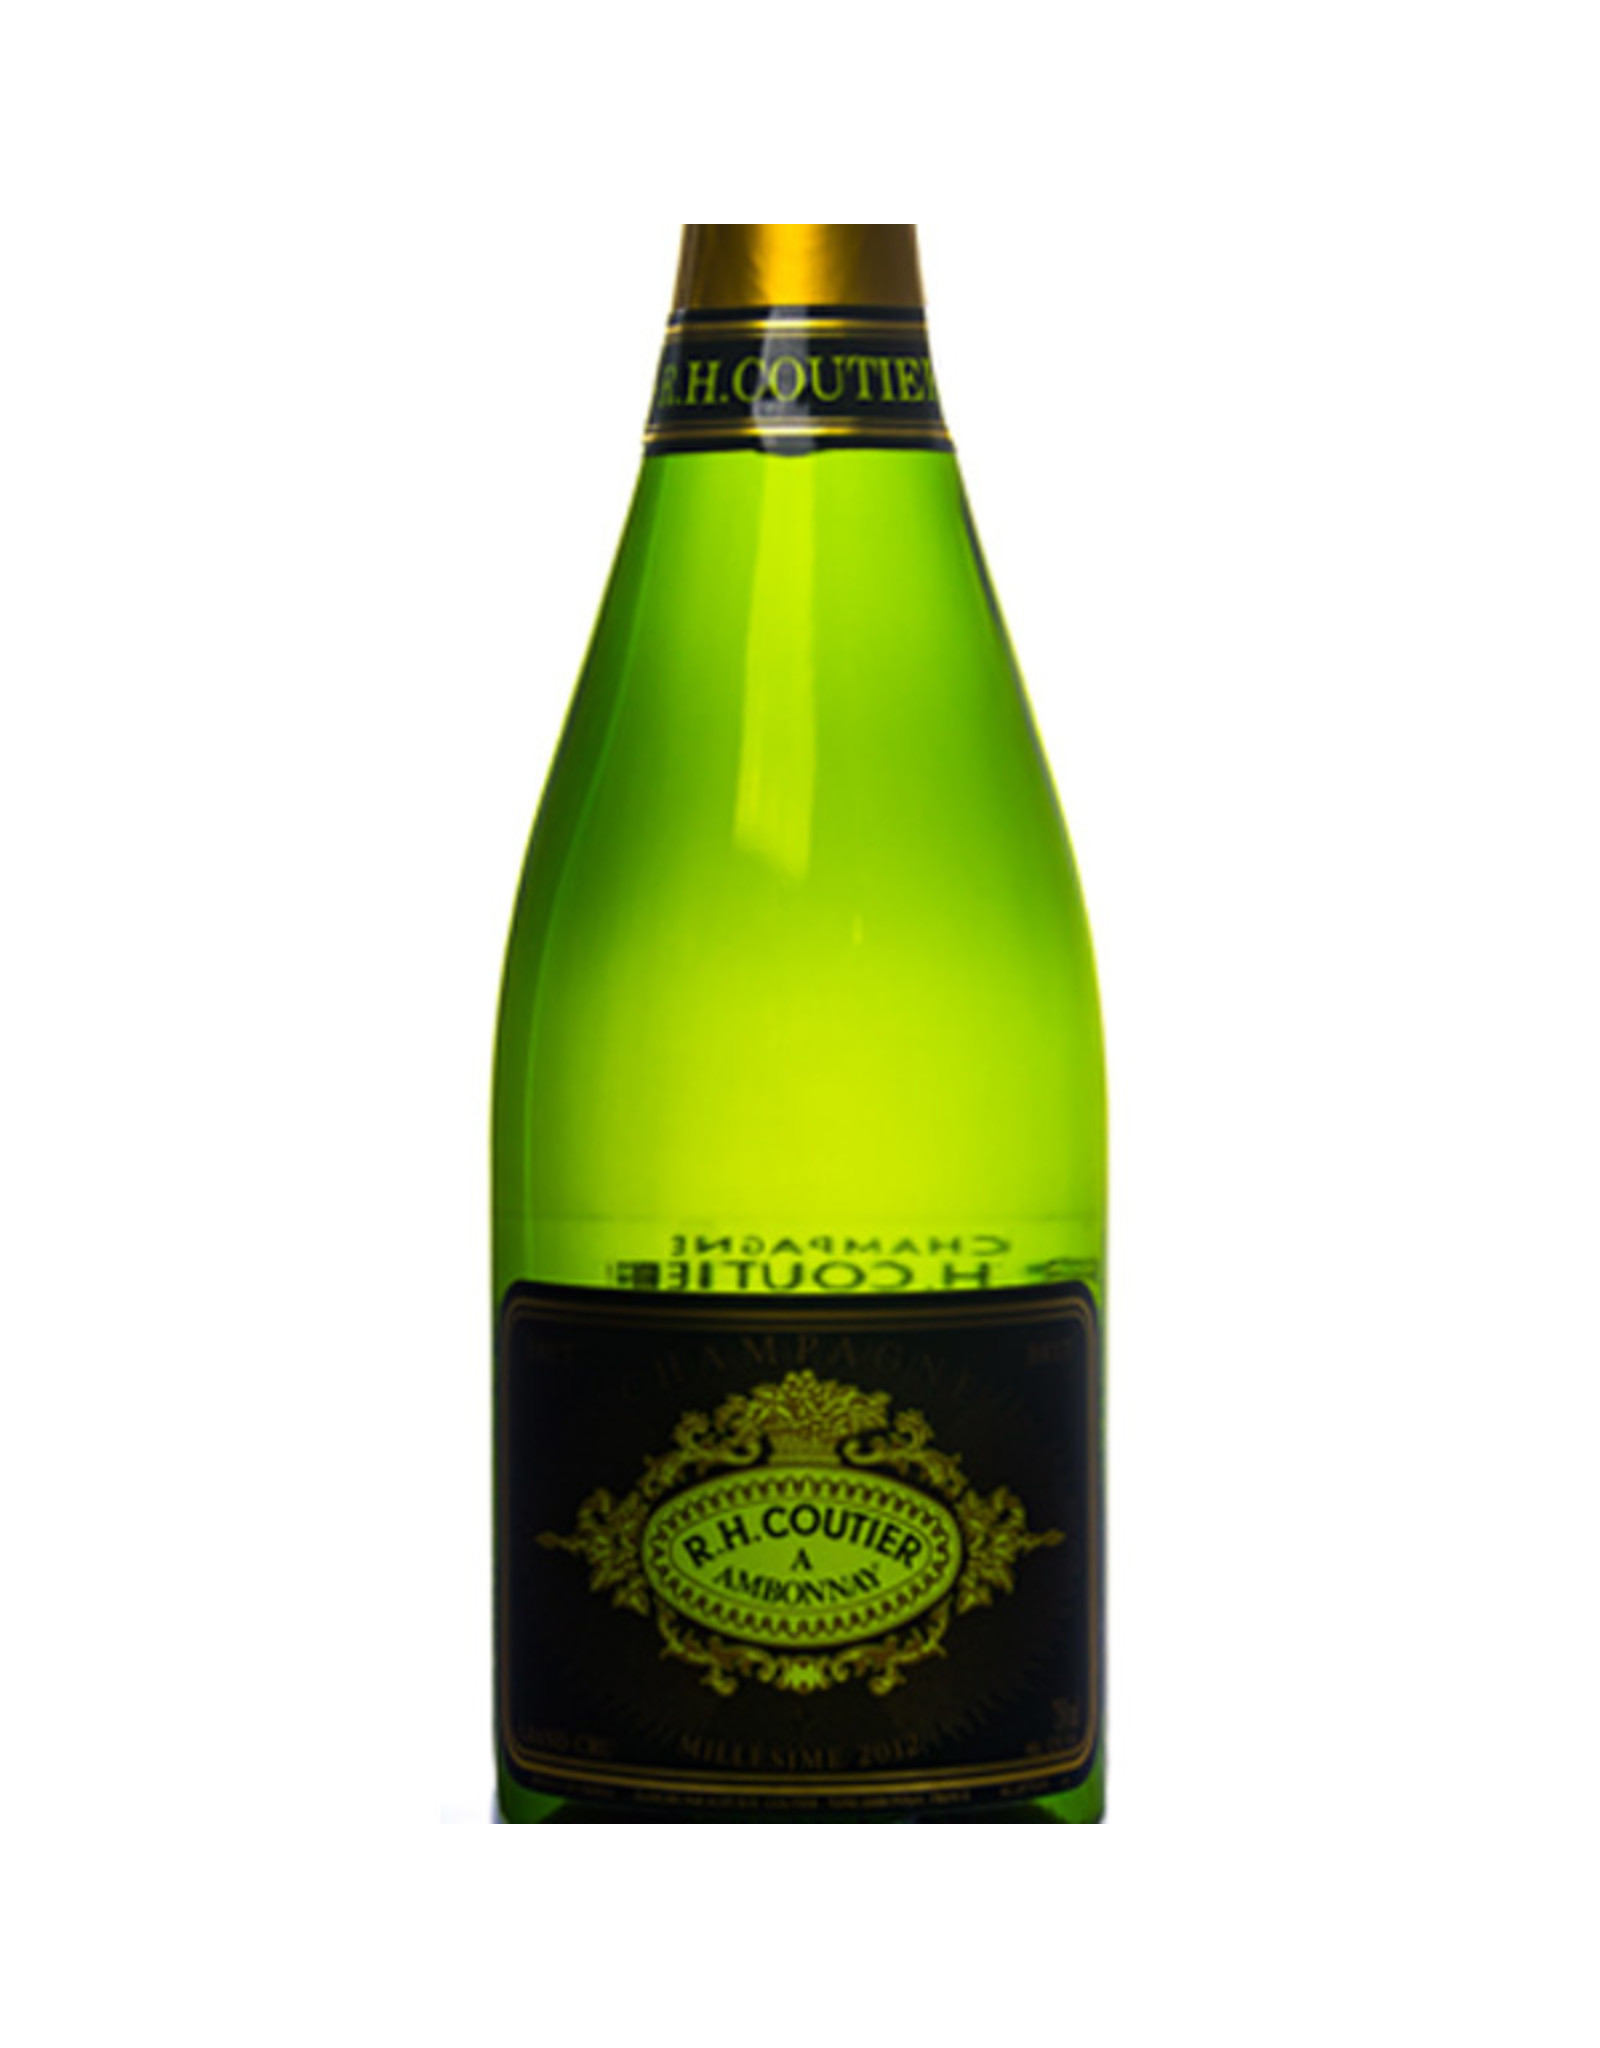 Coutier Champagne Brut Grand Cru Millésime 2012 magnum, Ambonnay